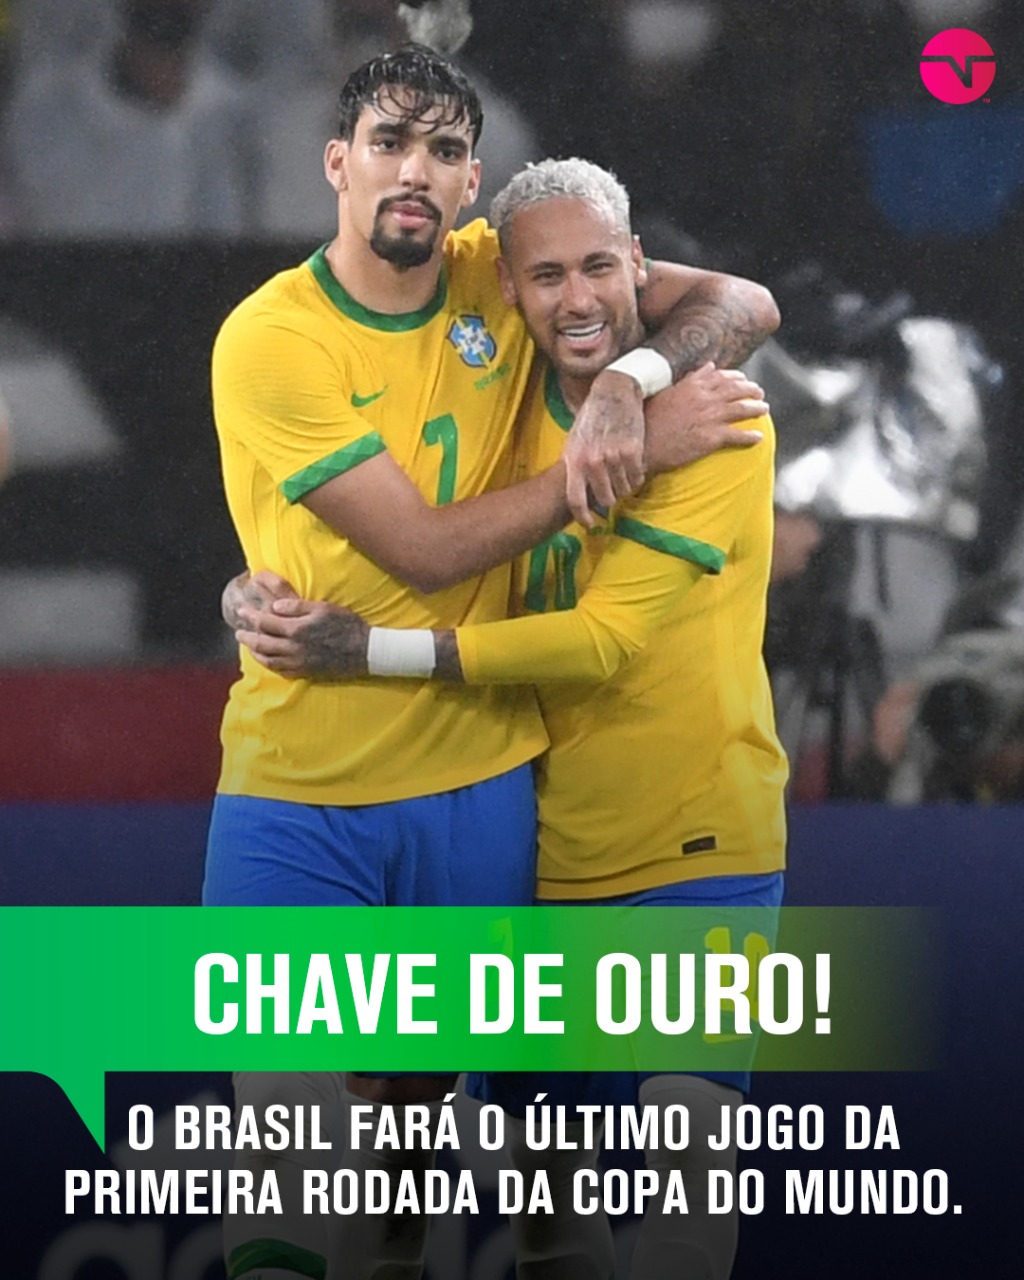 A PRIMEIRA RODADA DA COPA DO MUNDO - TNT Sports Brasil